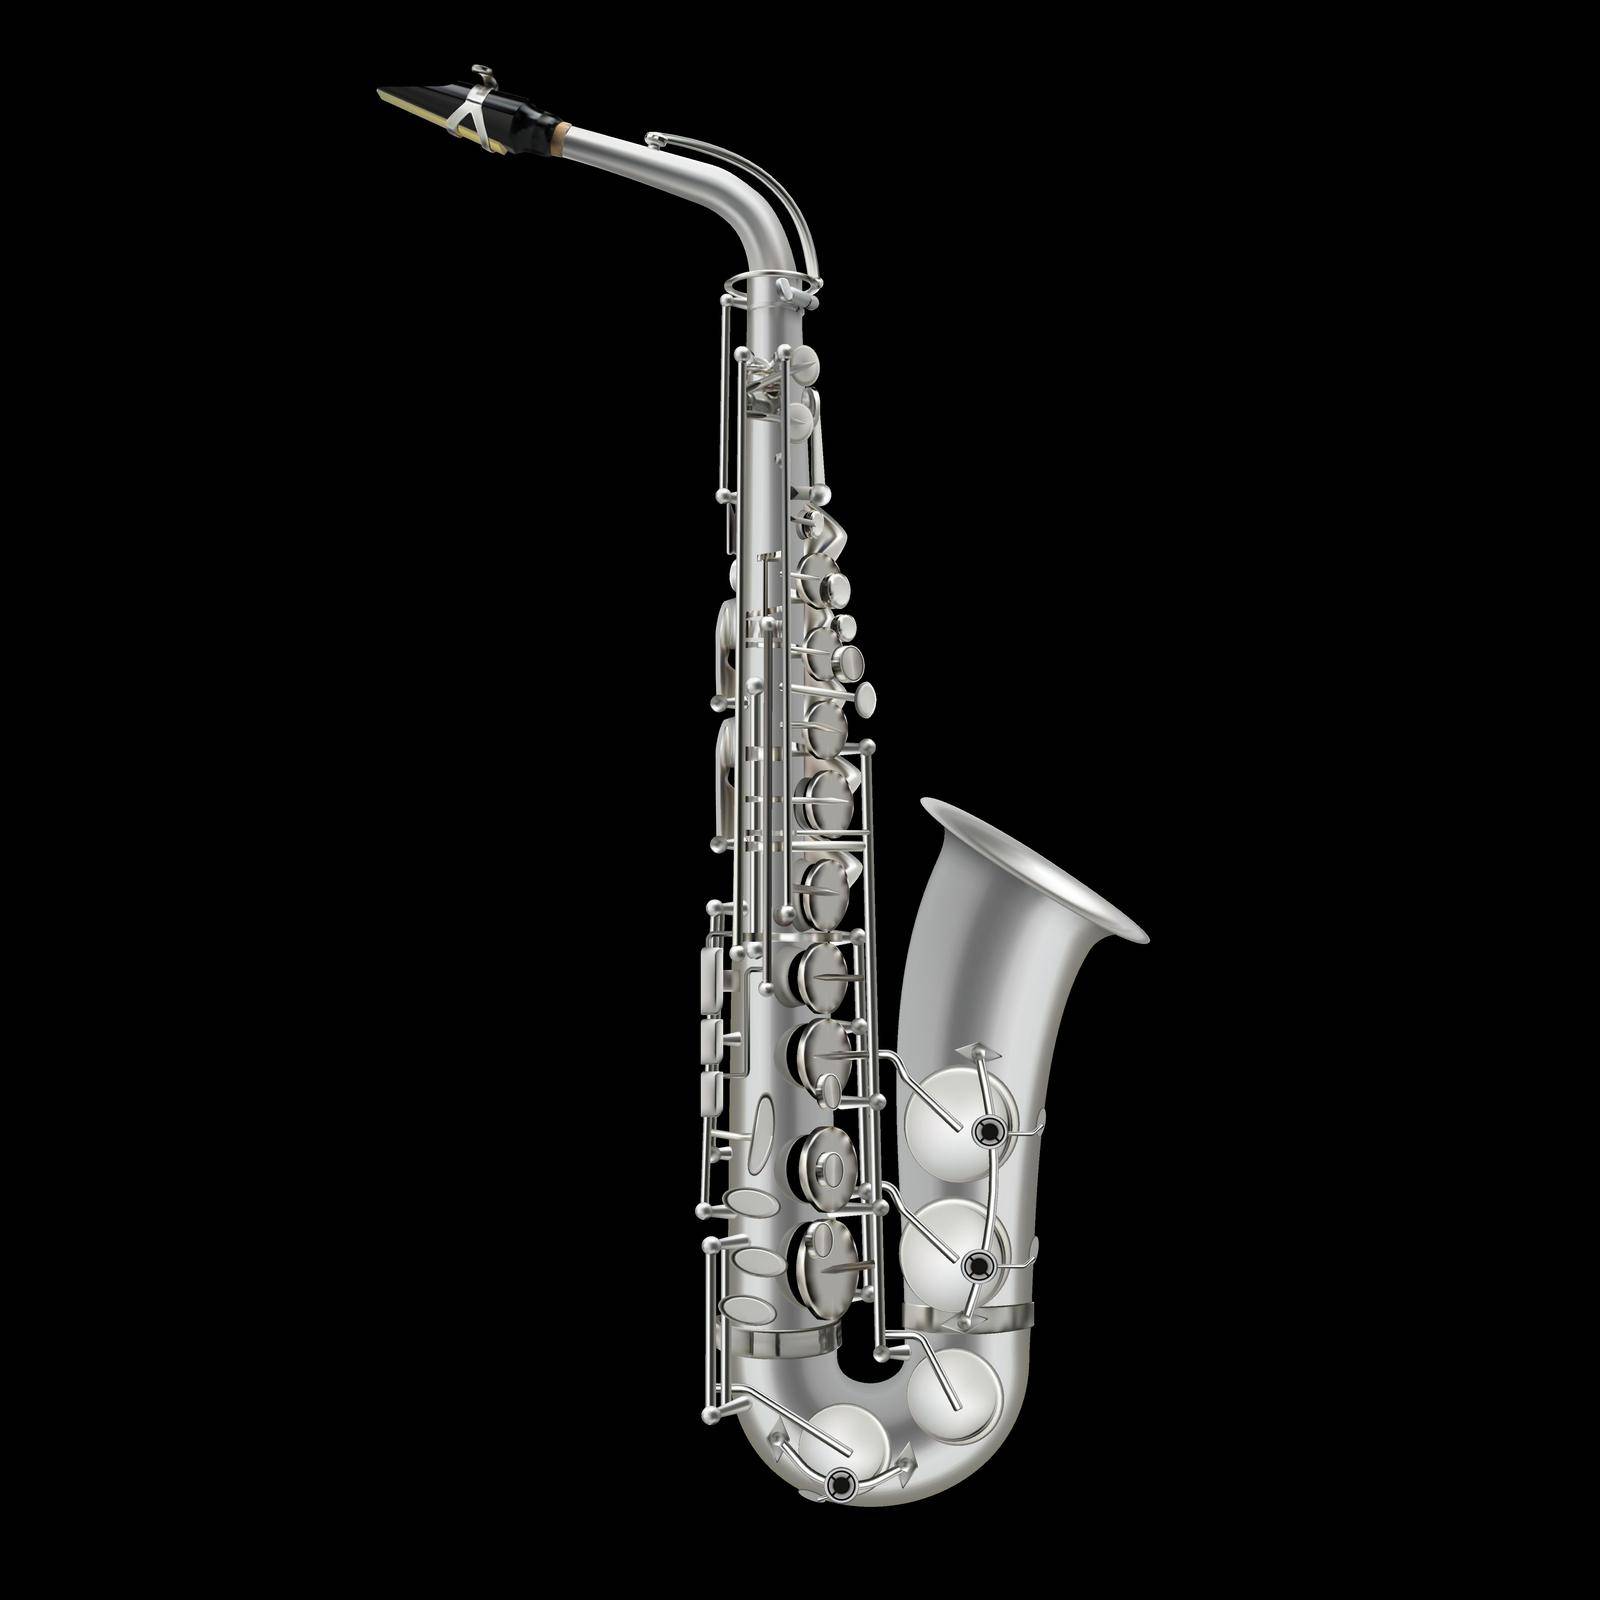 photorealistic saxophone vector illustration isolated on a black background